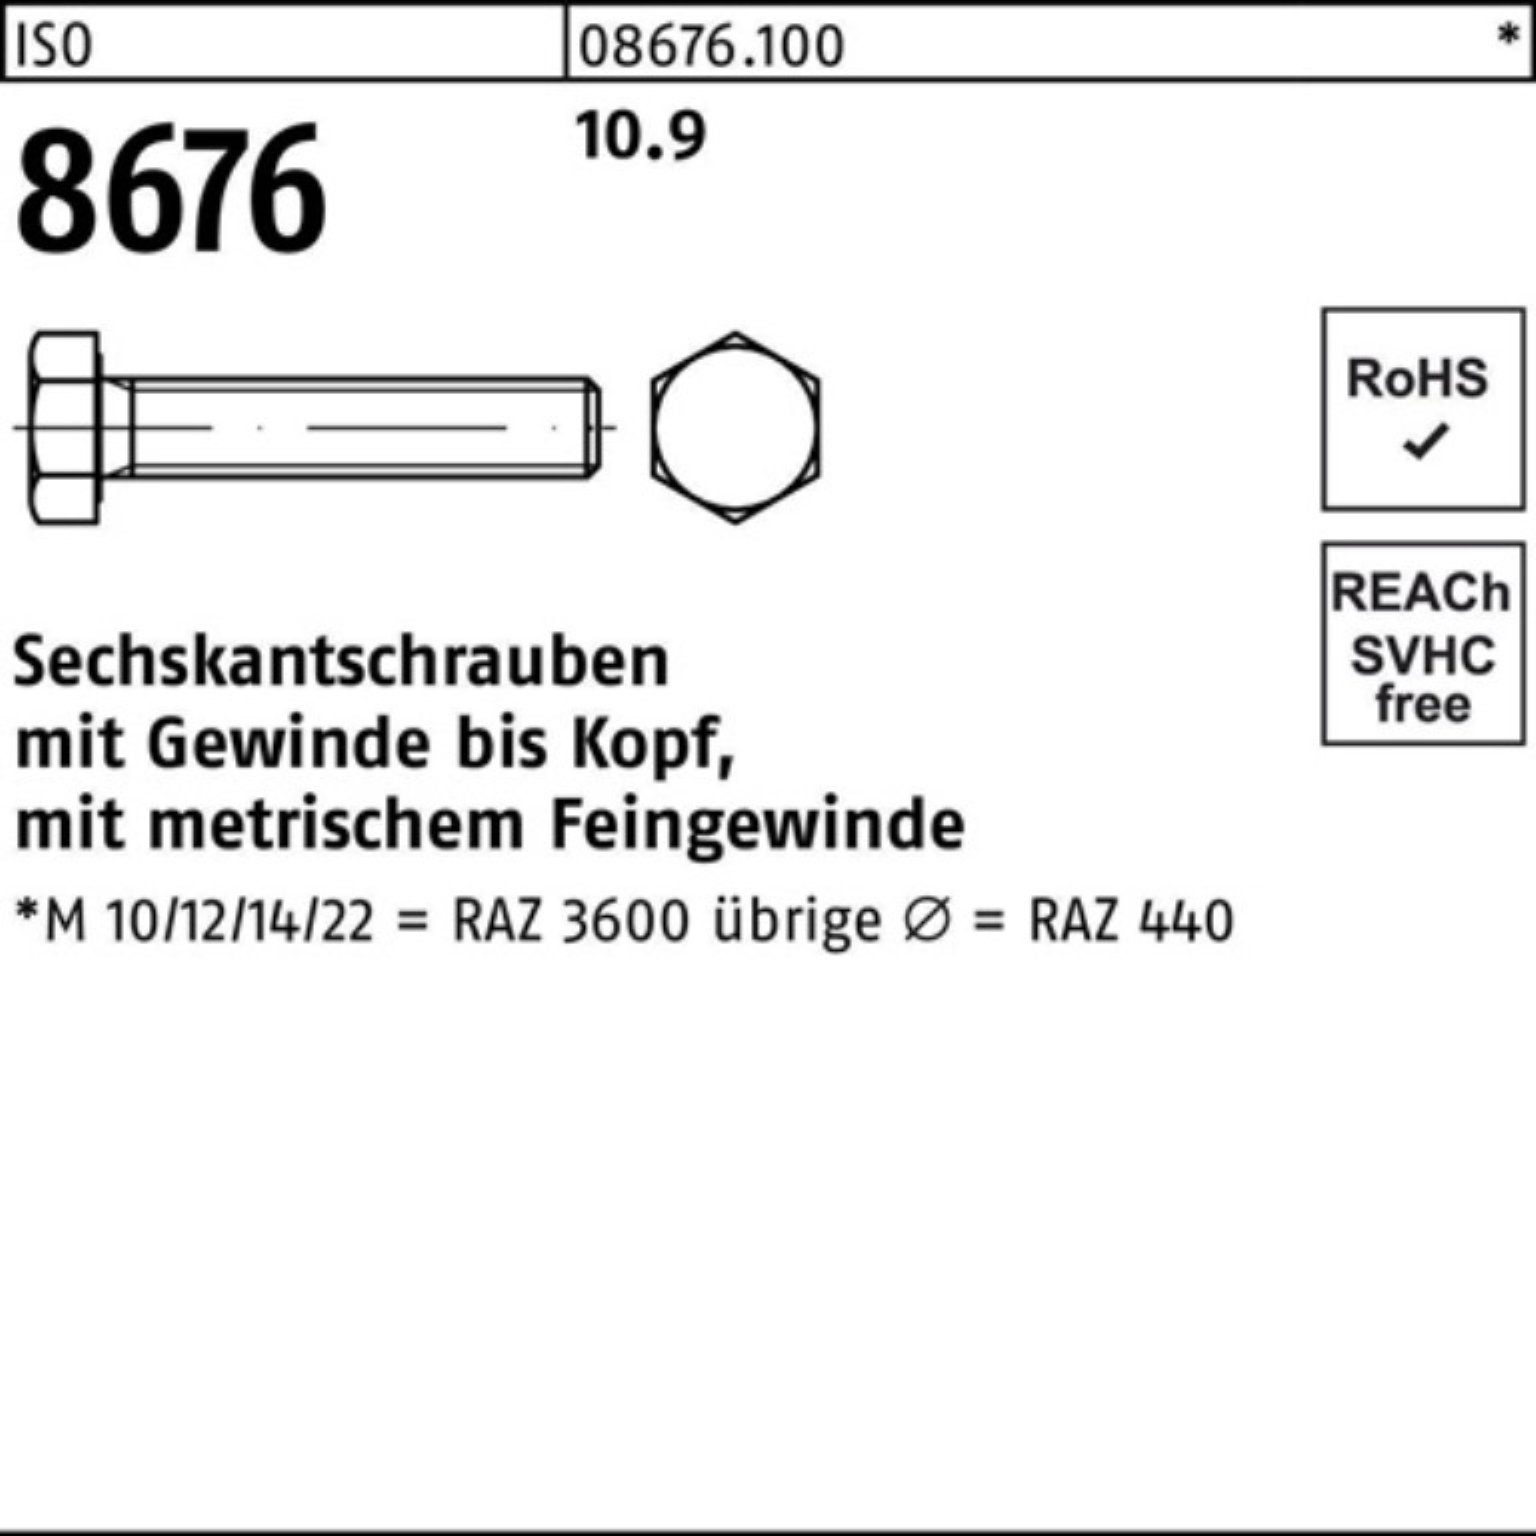 Pack Reyher Sechskantschraube Sechskantschraube M36x3x120 10.9 8 VG 8676 100er ISO 1 ISO Stück